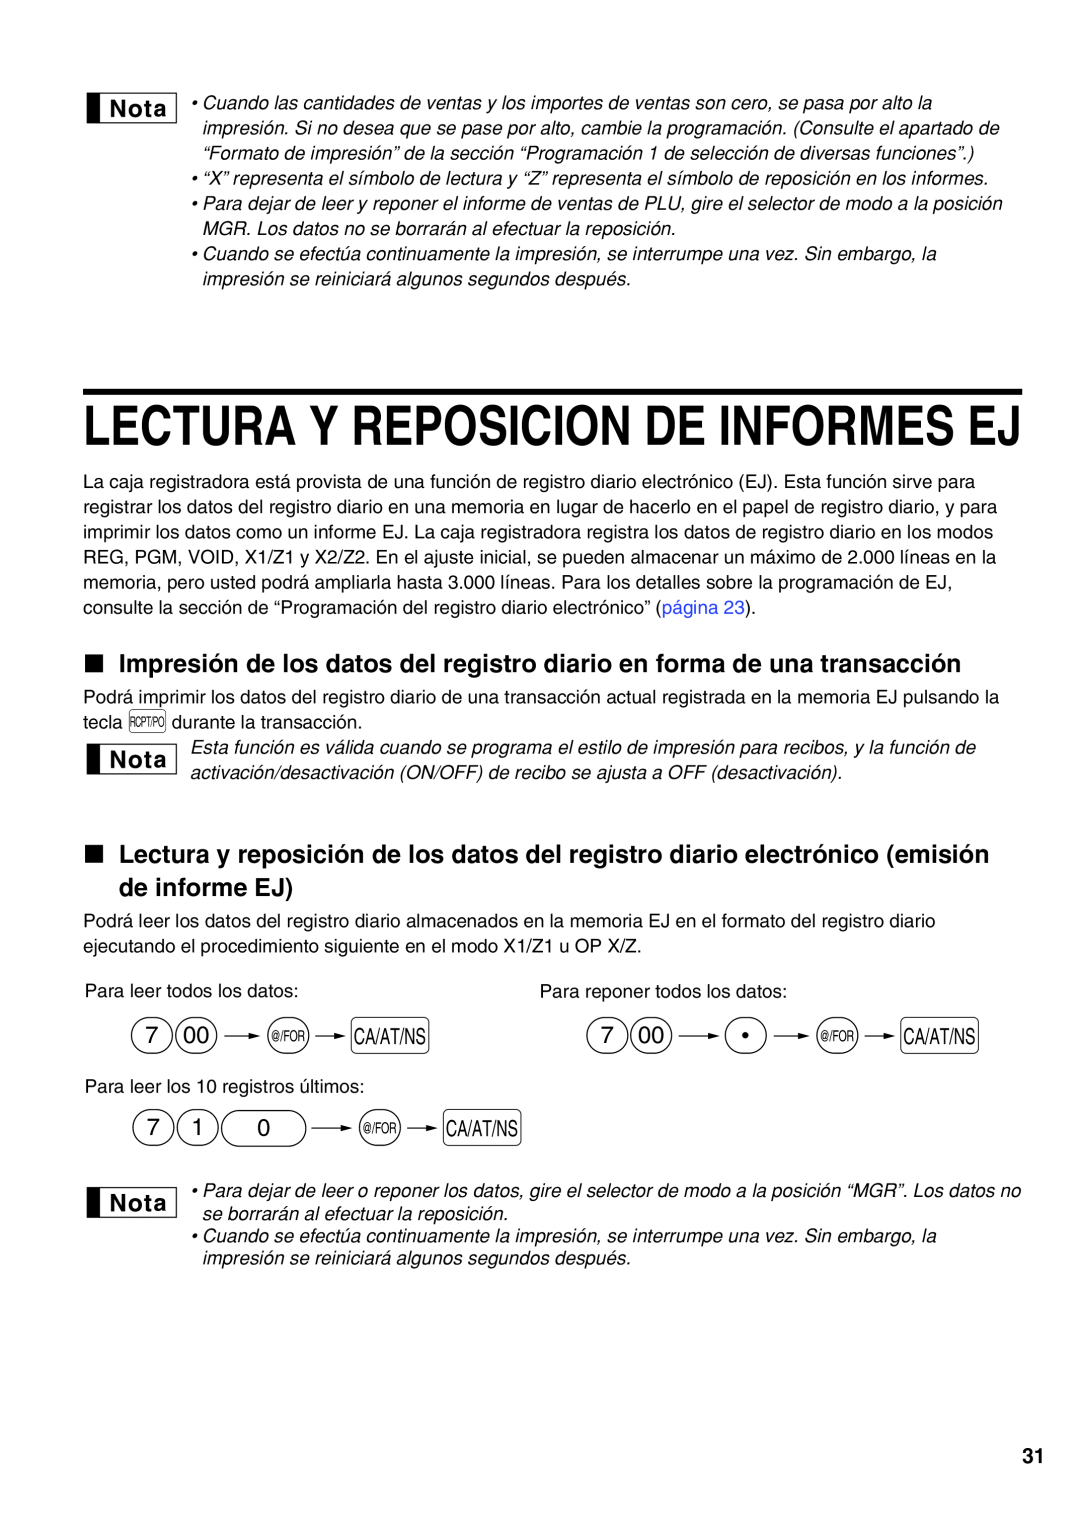 Sharp XE-A21S instruction manual 7 @ A 7 P @ A, 710 @ A, Lectura Y Reposicion De Informes Ej 